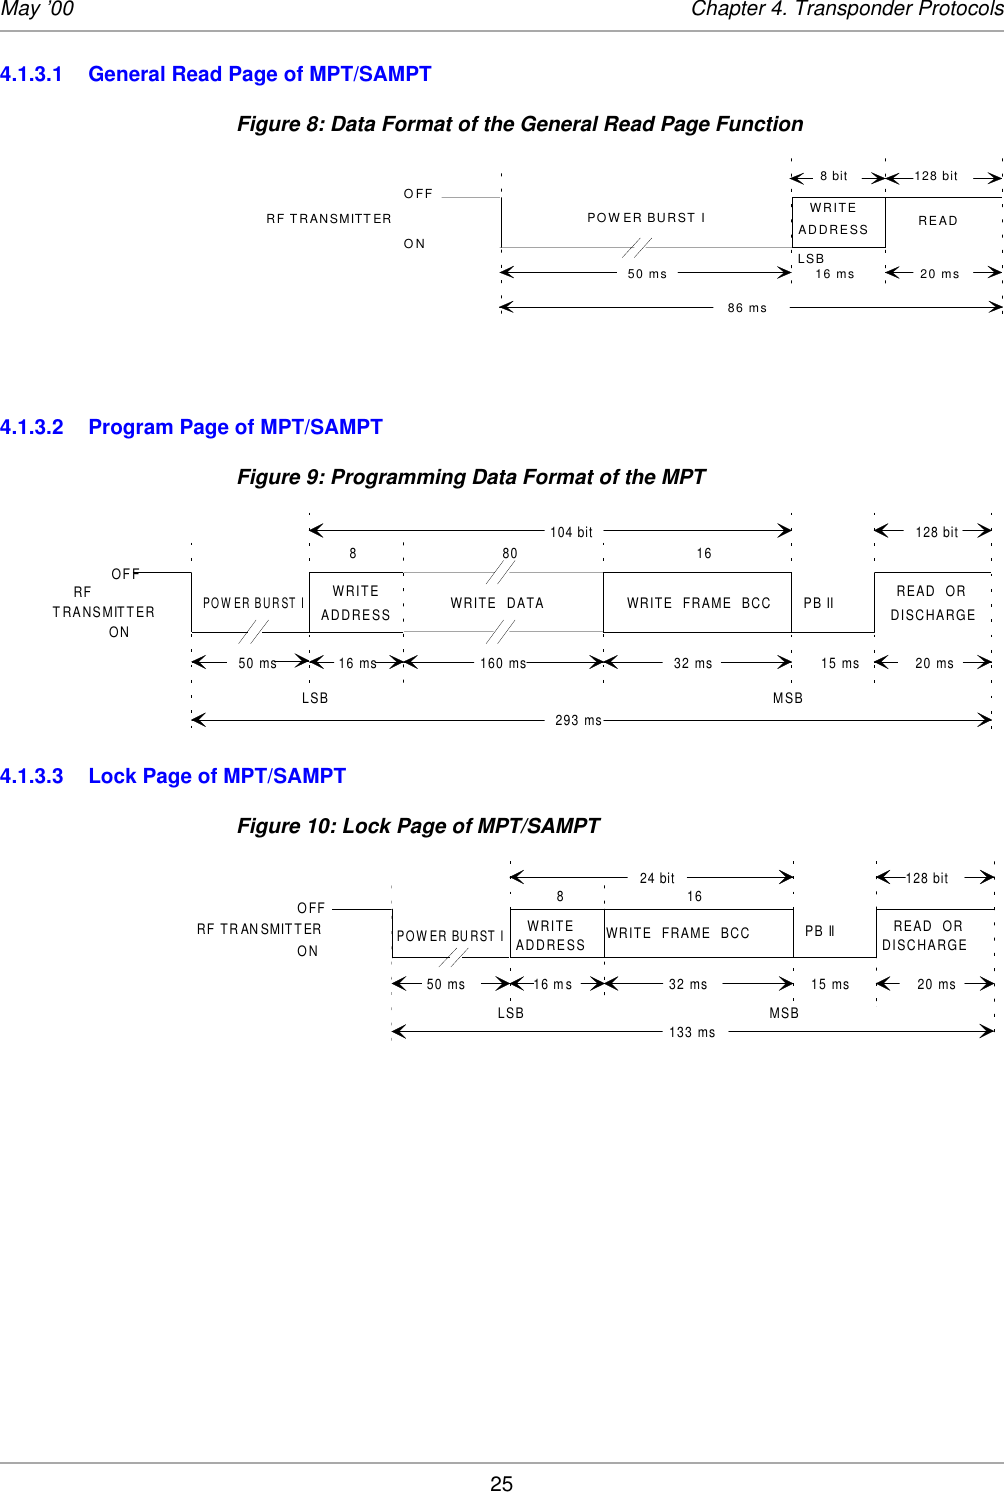 25May ’00 Chapter 4. Transponder Protocols4.1.3.1 General Read Page of MPT/SAMPTFigure 8: Data Format of the General Read Page Function4.1.3.2 Program Page of MPT/SAMPTFigure 9: Programming Data Format of the MPT4.1.3.3 Lock Page of MPT/SAMPTFigure 10: Lock Page of MPT/SAMPT50 msREADWRITEADDRESS86 msLSB8 bit 128 bit20 ms16 msONOFFPOWER BURST IRF TRANSMITTERREAD  OR20 ms50 msWRITEADDRESS WRITE  DATA WRITE  FRAME  BCC880 1616 ms 160 ms 32 ms 15 ms293 ms104 bit 128 bitLSBDISCHARGEMSBRFOFFONTRANSMITTERPOW ER BURST IPB II50 msWRITEADDRESS8WRITE  FRAME  BCC1632 ms133 ms24 bitREAD  OR20 ms128 bitDISCHARGE15 msLSB16 msMSBONOFFPOWER BURST IRF TRANSMITTER PB II